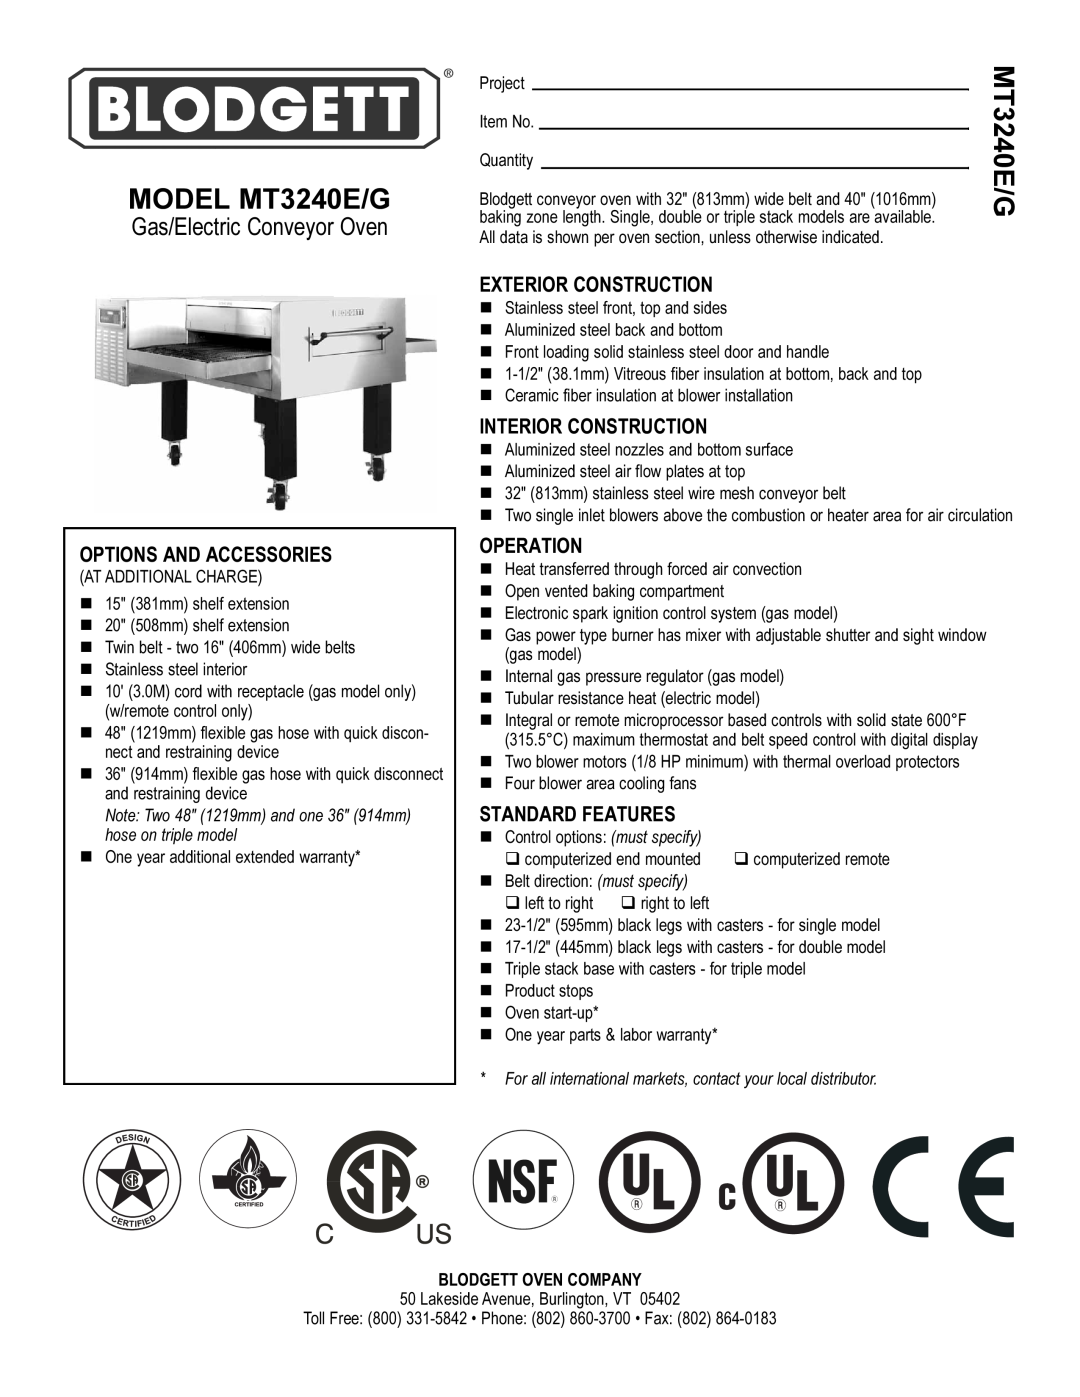 Blodgett warranty MODEL MT3240E/G, Options And Accessories, Exterior Construction, Interior Construction, Operation 